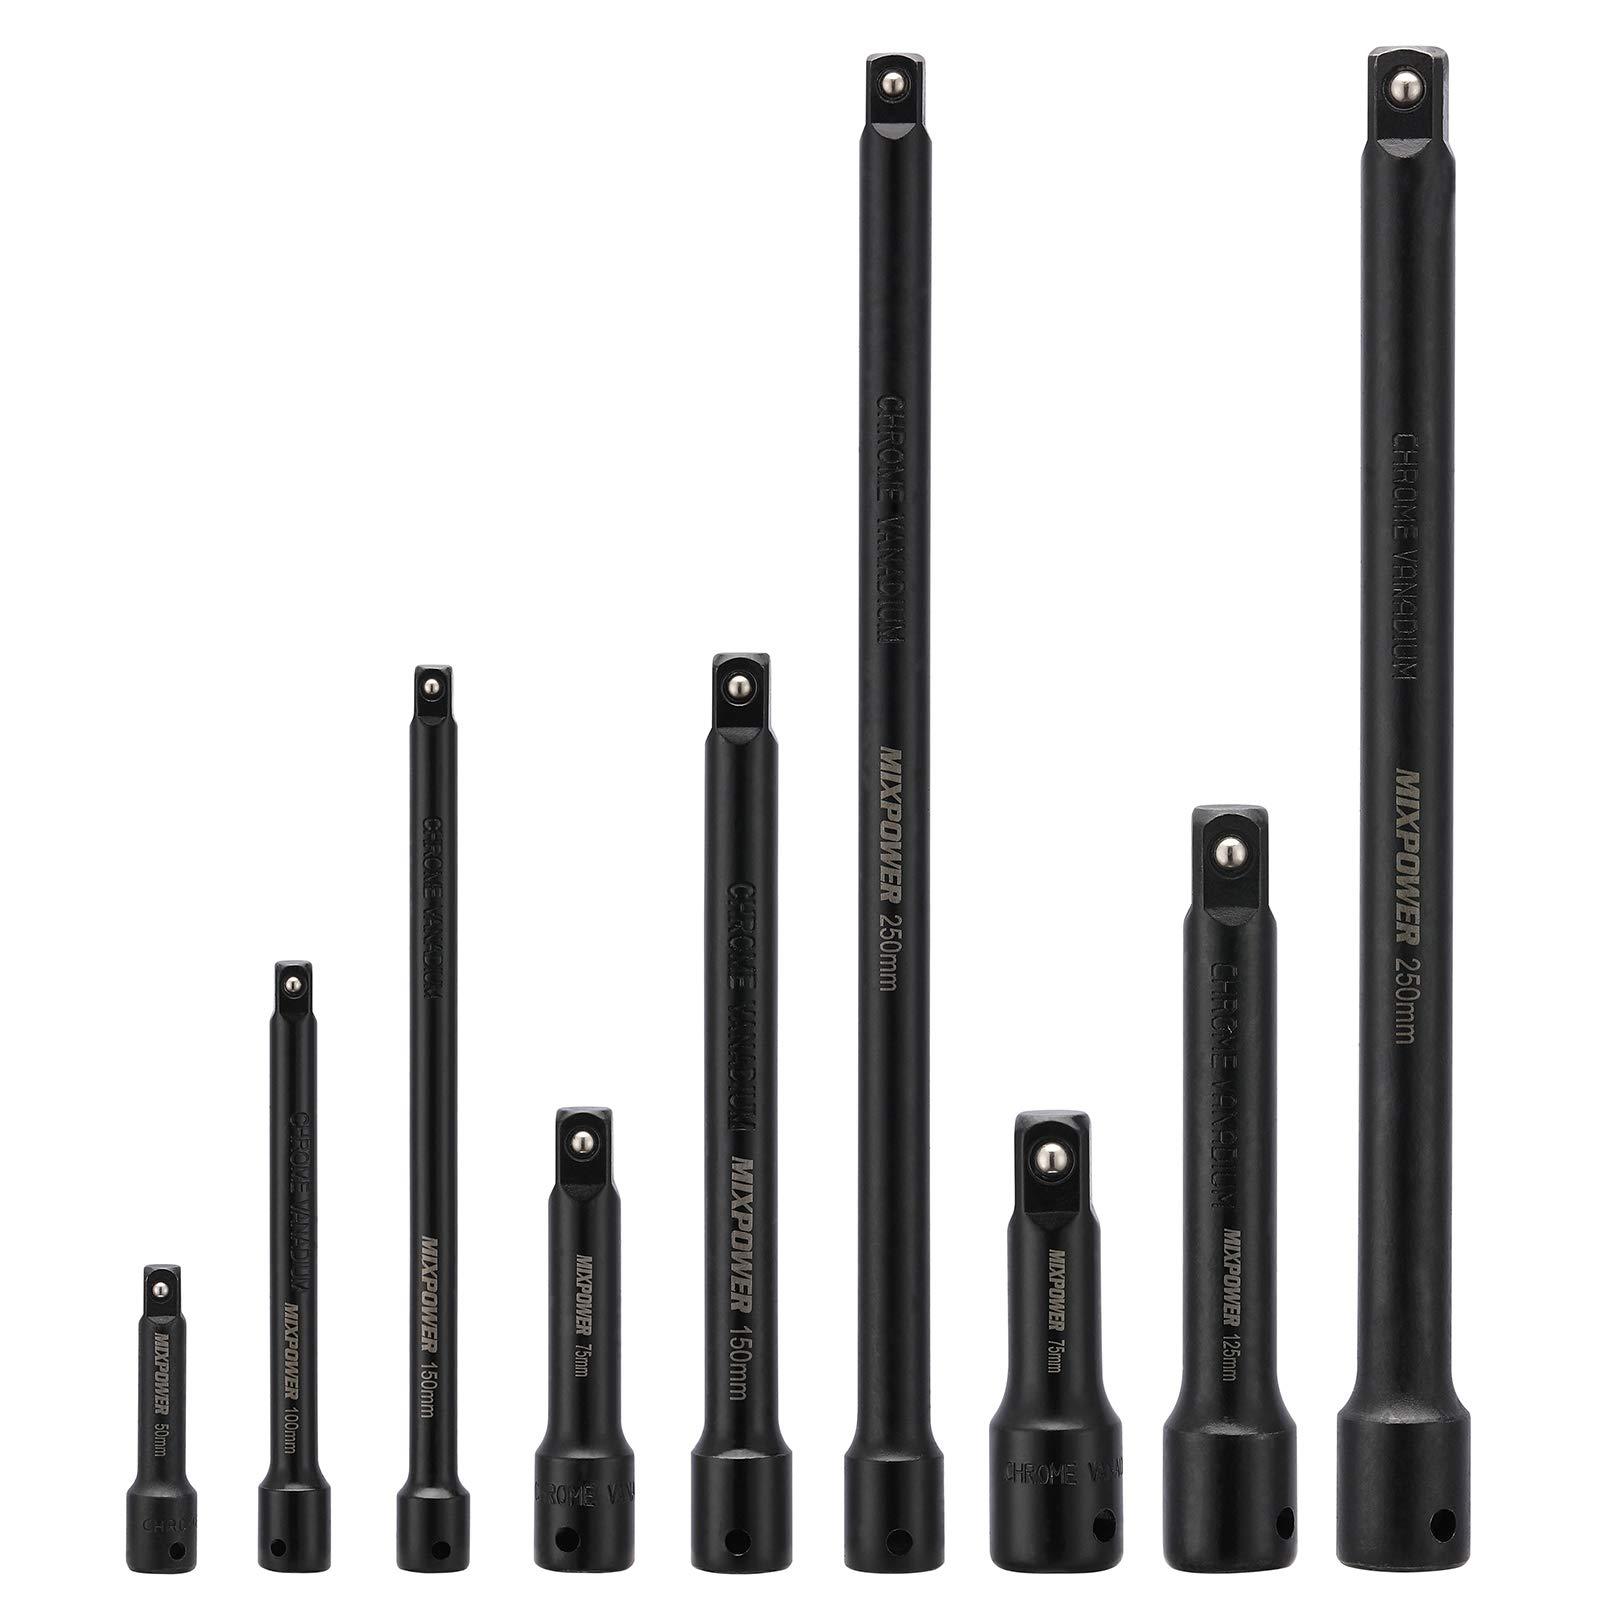 mixpower 9-piece extension bar set, 1/4", 3/8" and 1/2" drive socket extension, premium chrome vanadium steel with black phos